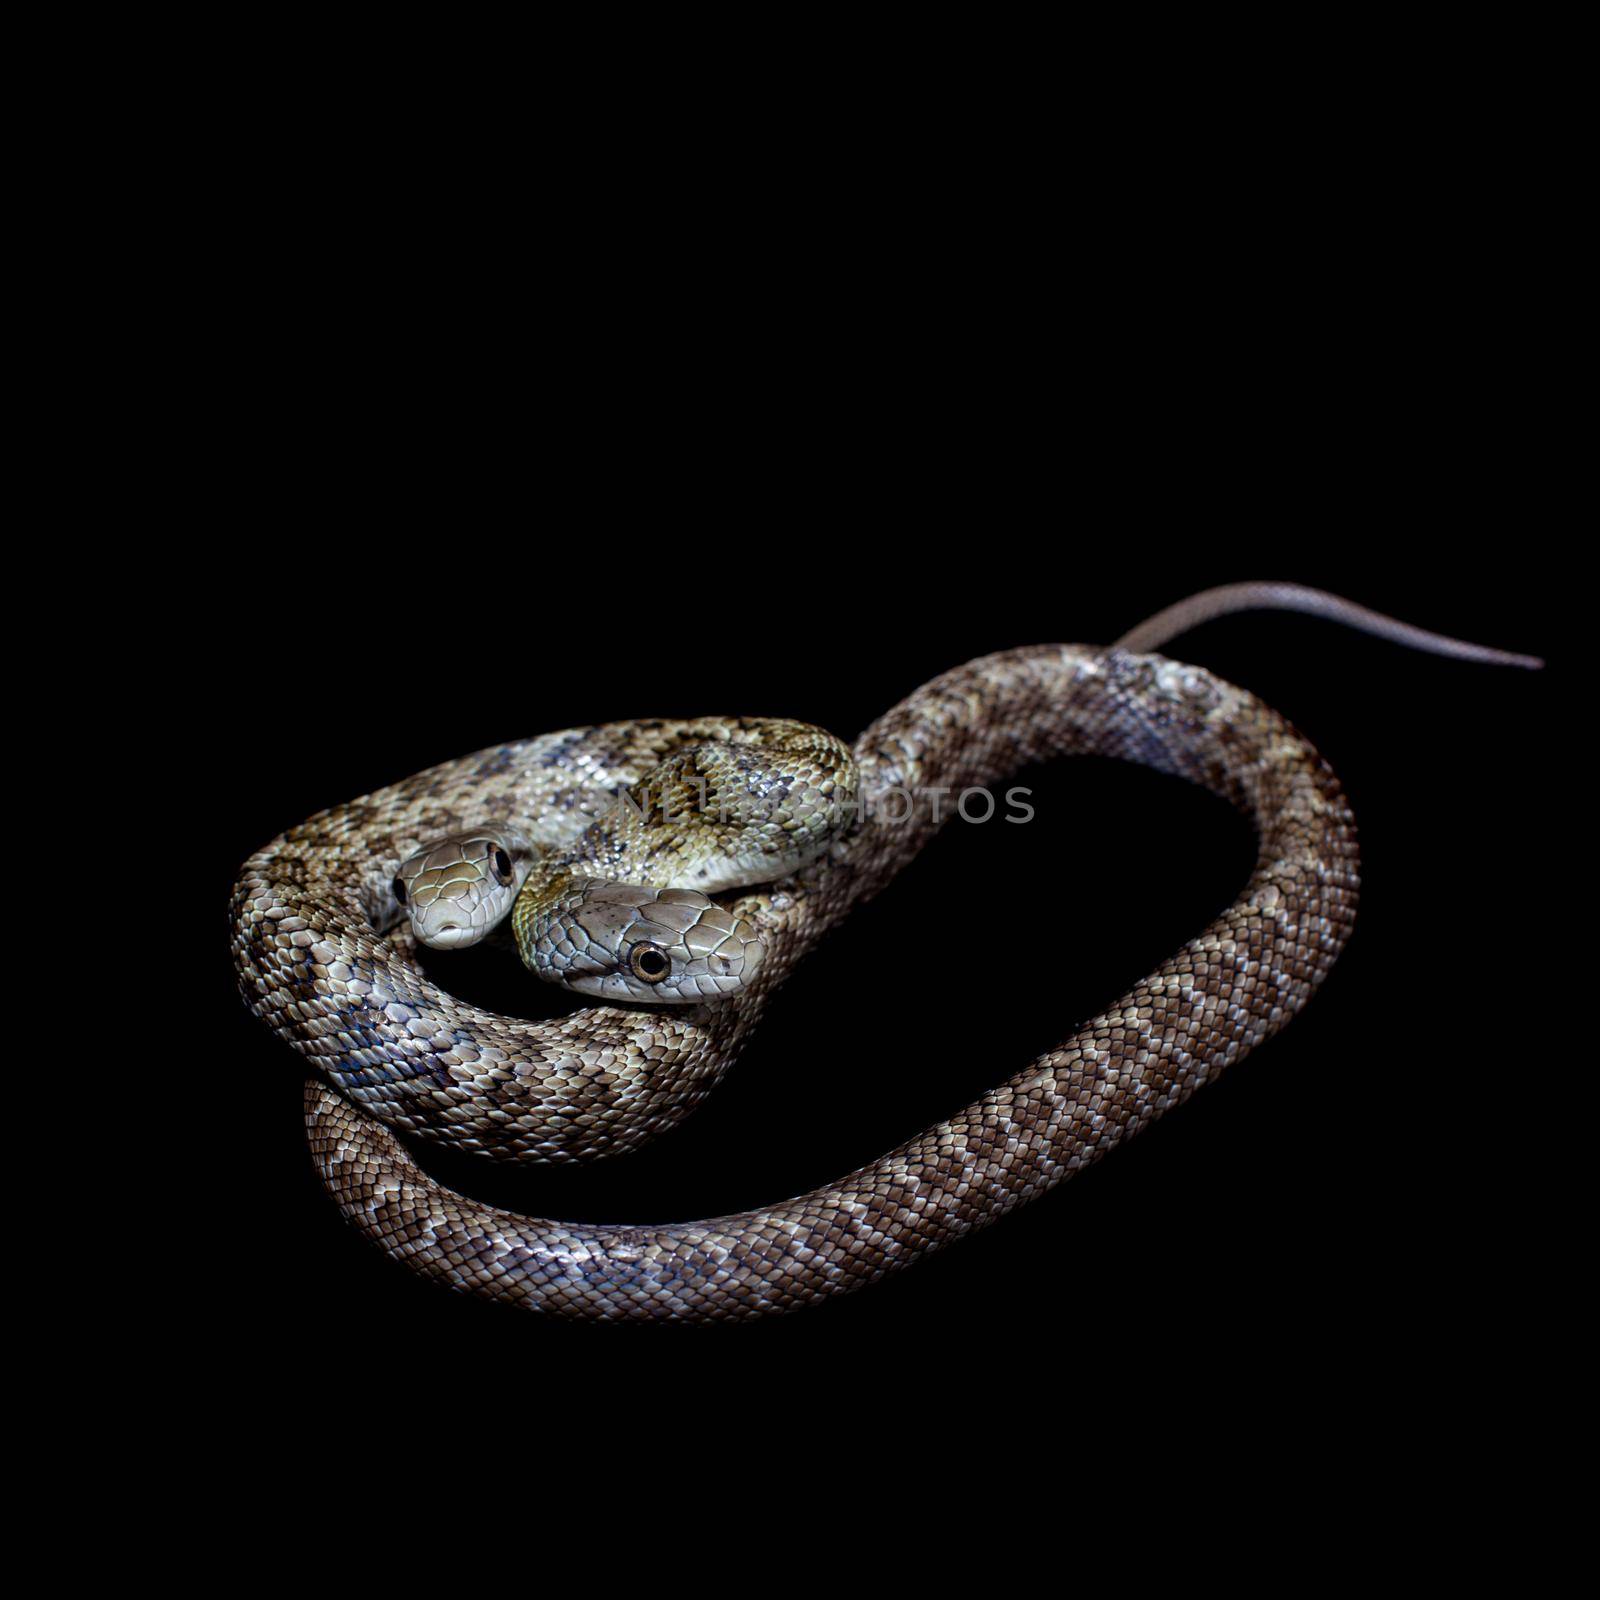 The two headed Japanese rat snake, Elaphe climacophora, on black by RosaJay